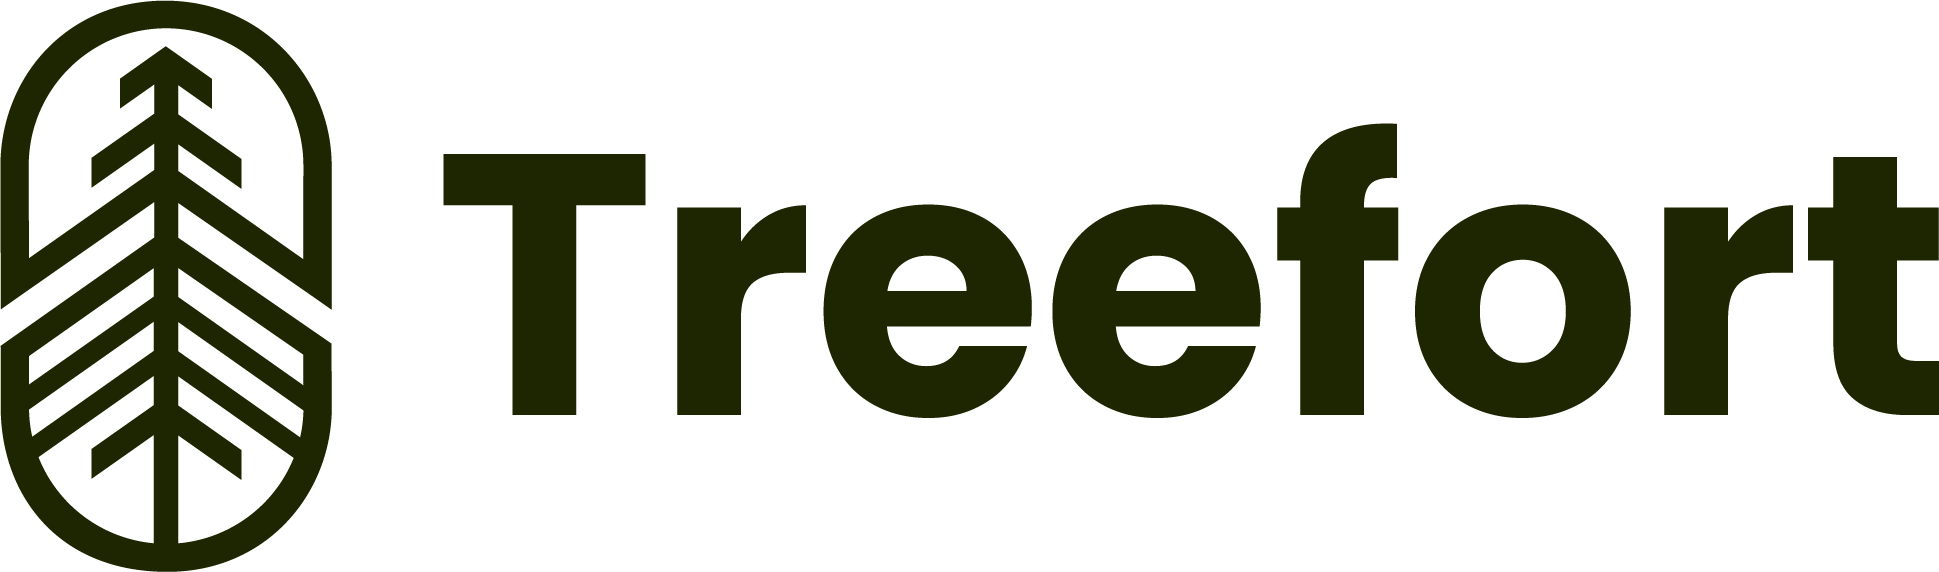 Treefort logo